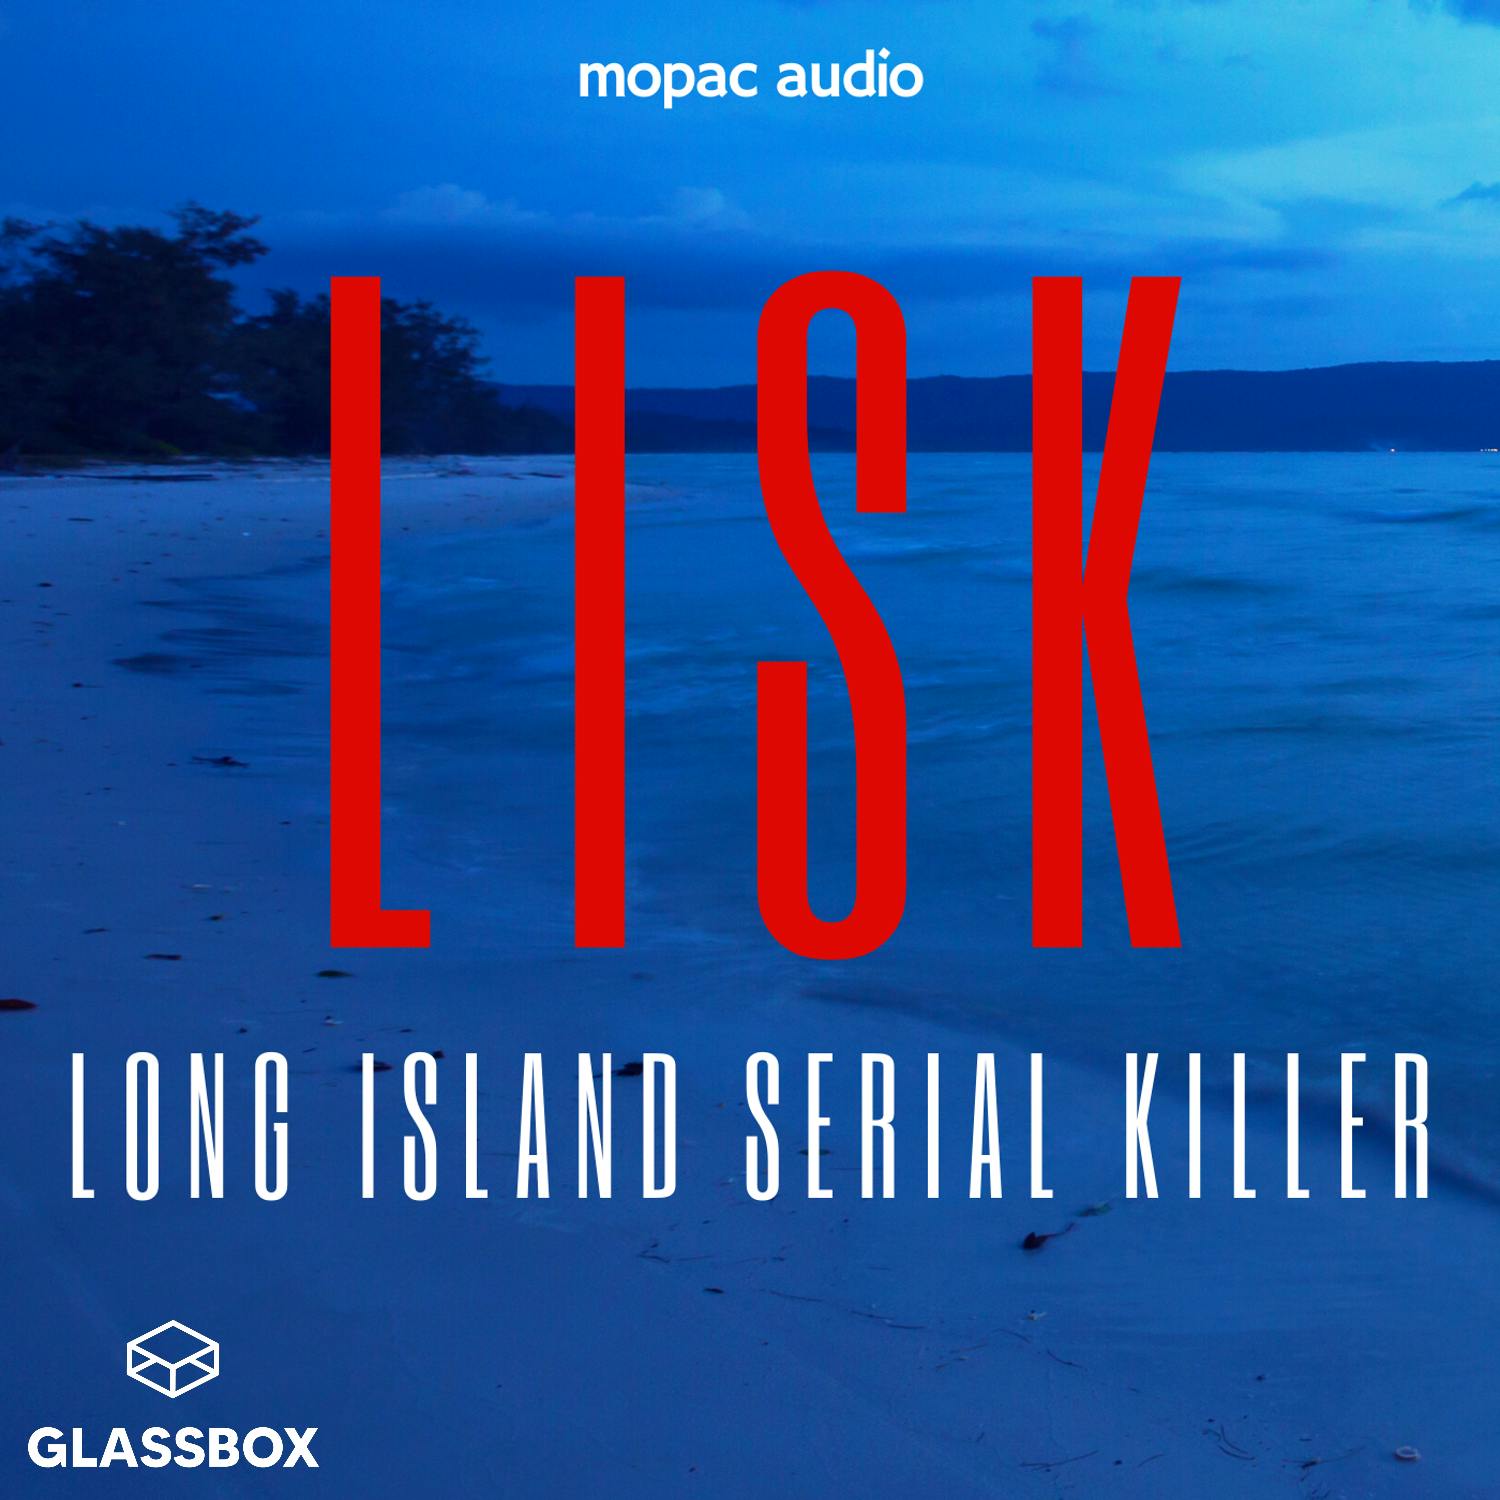 Introducing LISK: Long Island Serial Killer